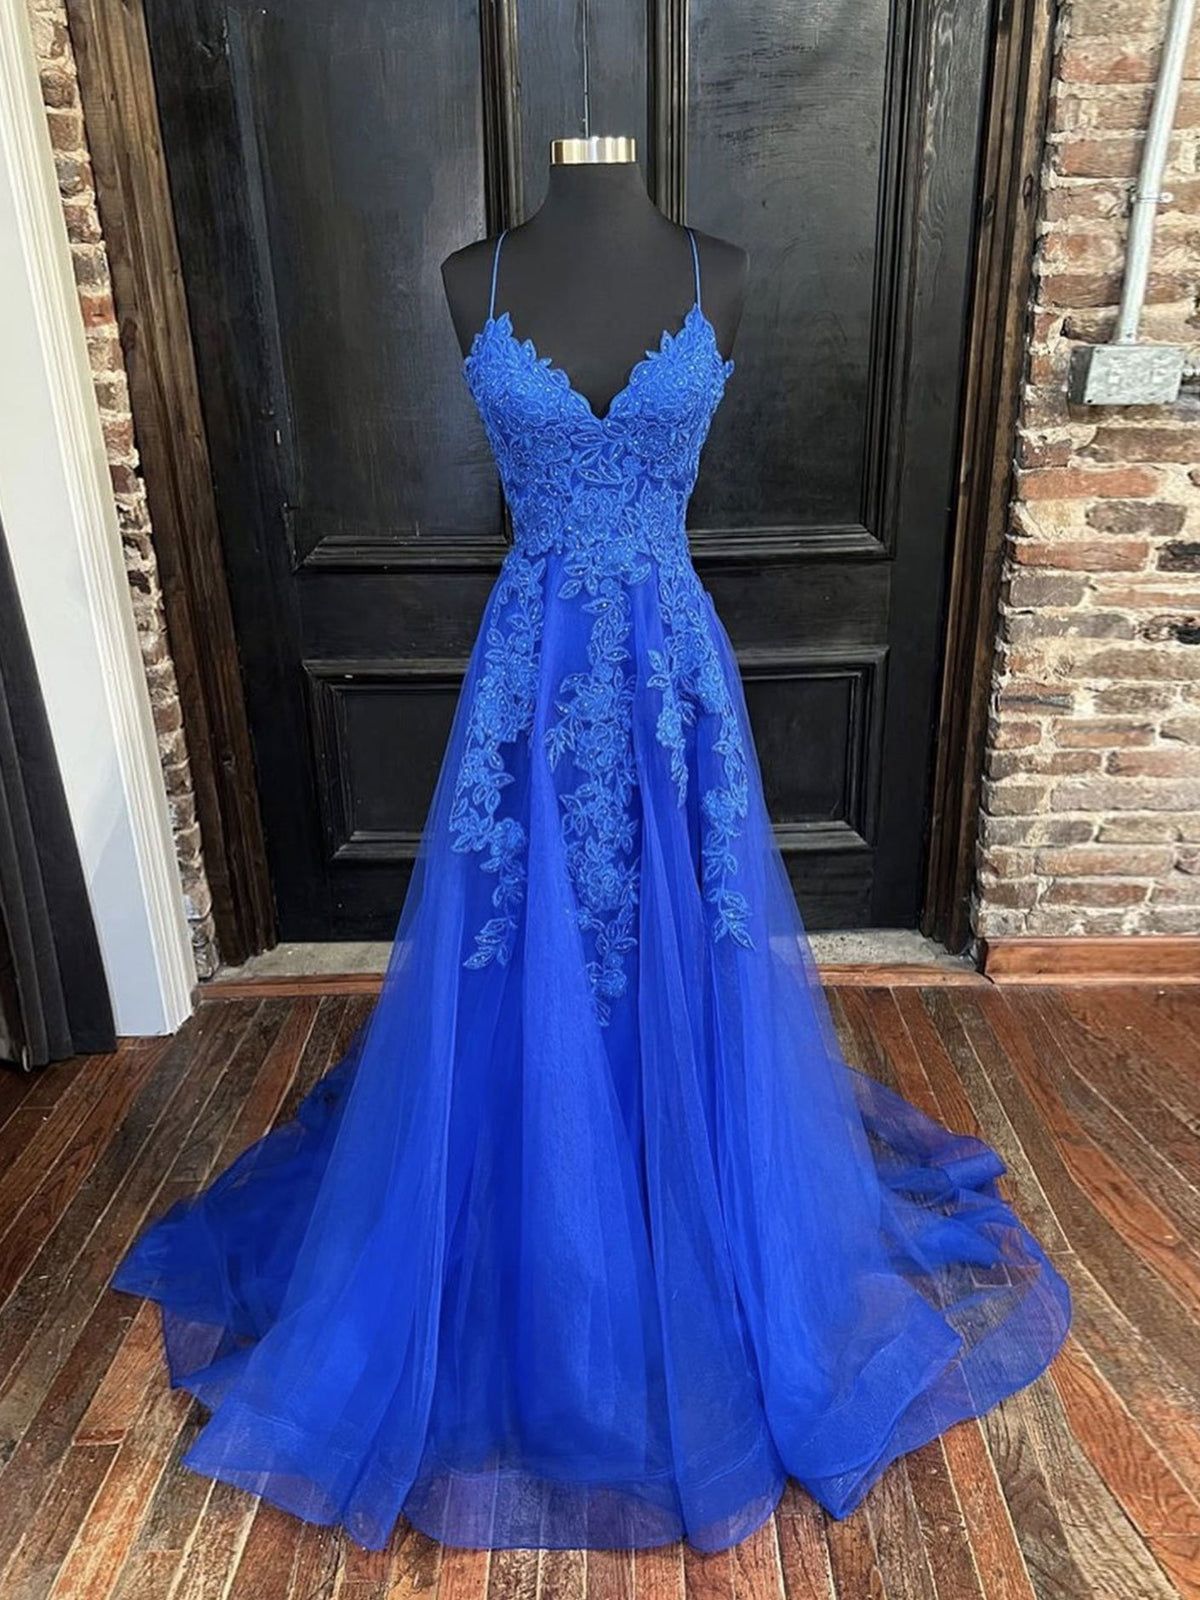 Party Dresses Teen, A Line V Neck Royal Blue Lace Prom Dresses, Royal Blue Lace Formal Evening Dresses